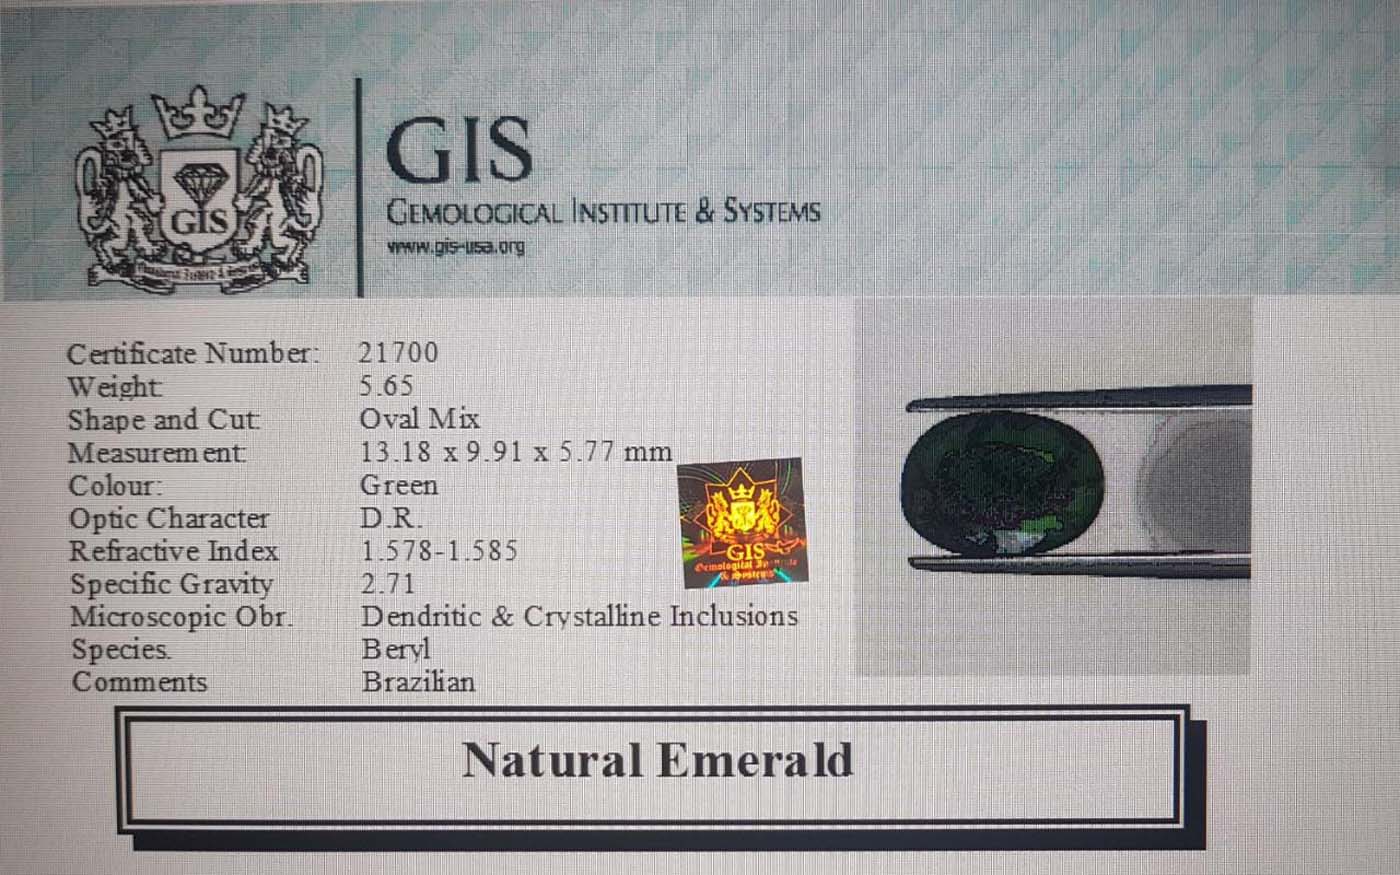 Emerald 5.65 Ct.